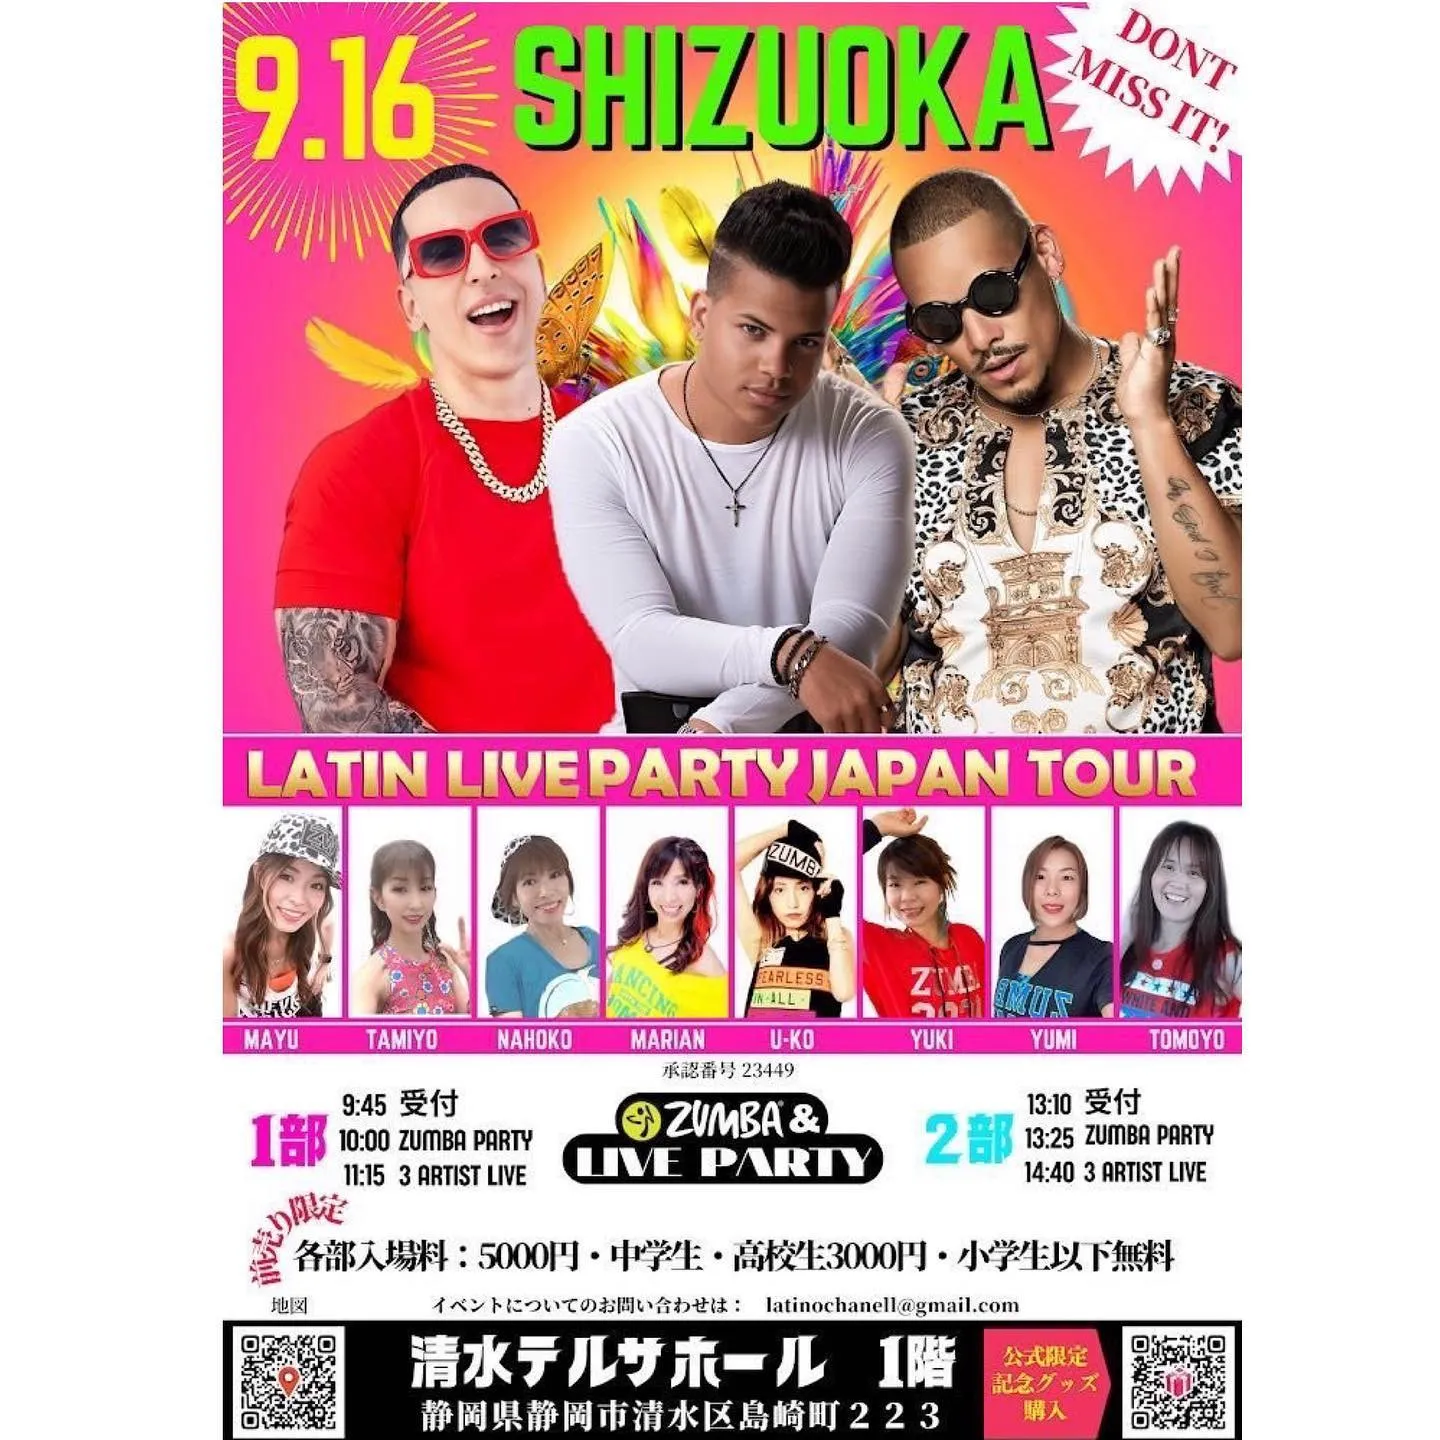 9/16 KENFIT LATIN LIVE PARTY JAPAN TOUR